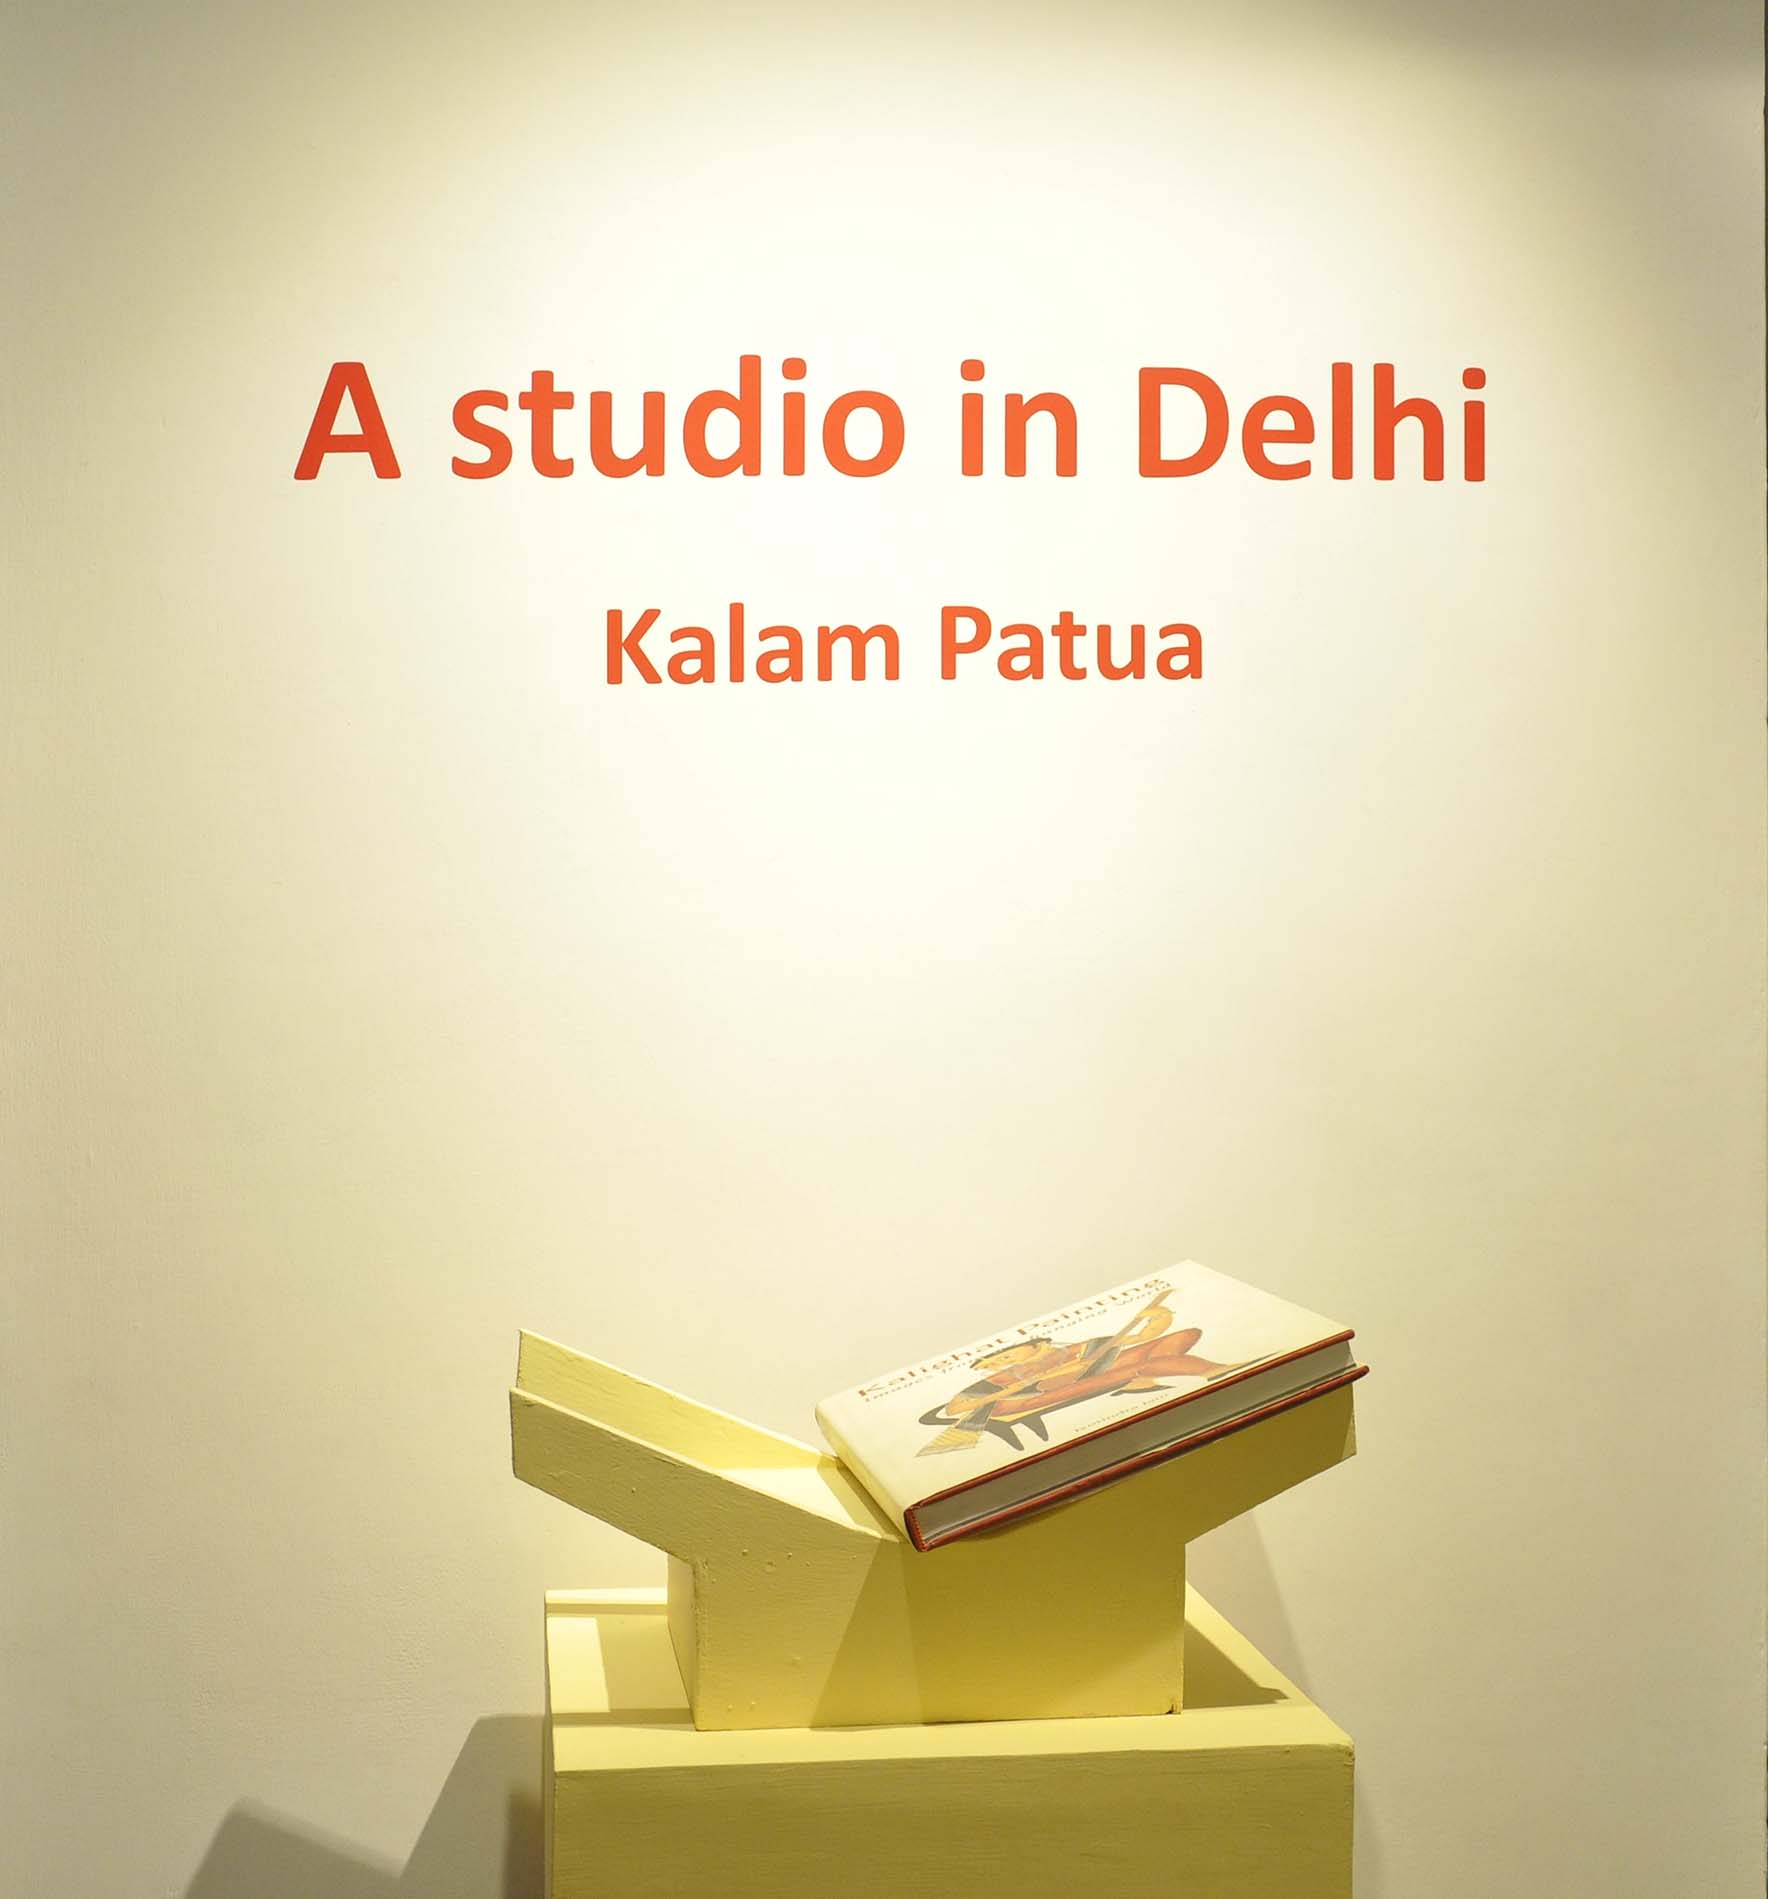 Installation of Kalam Patua Show